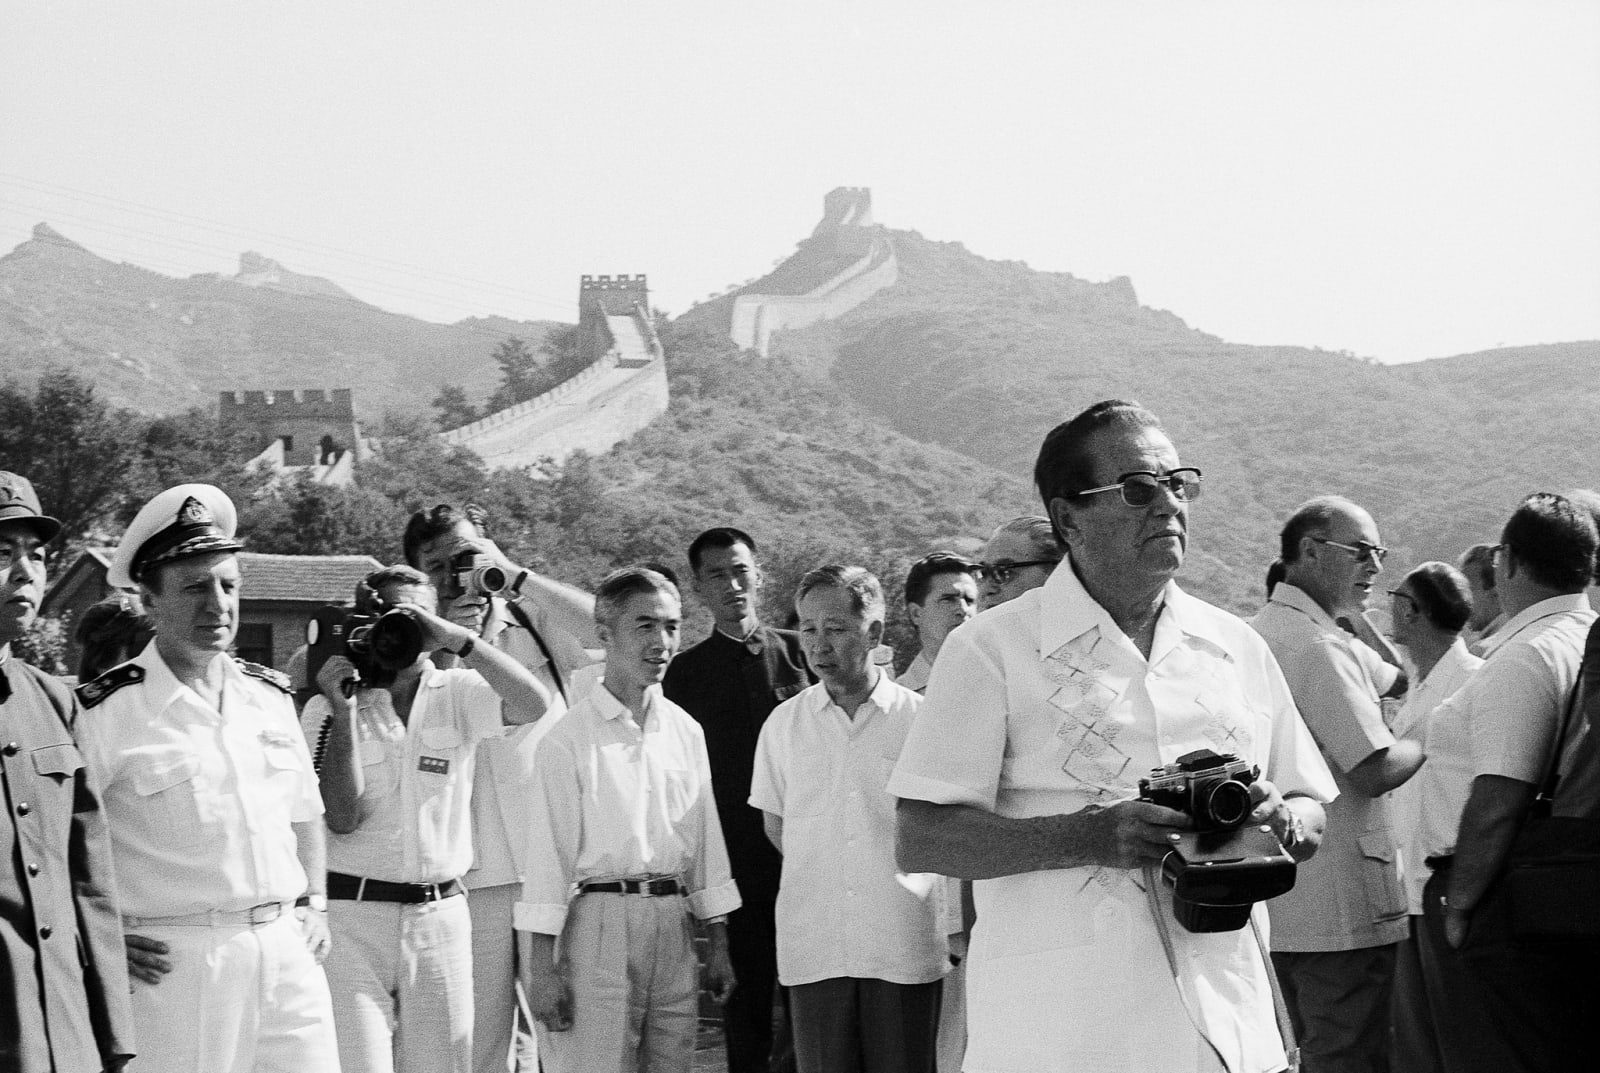 Joco Žnidaršič, The Great Wall of China IV, 1977